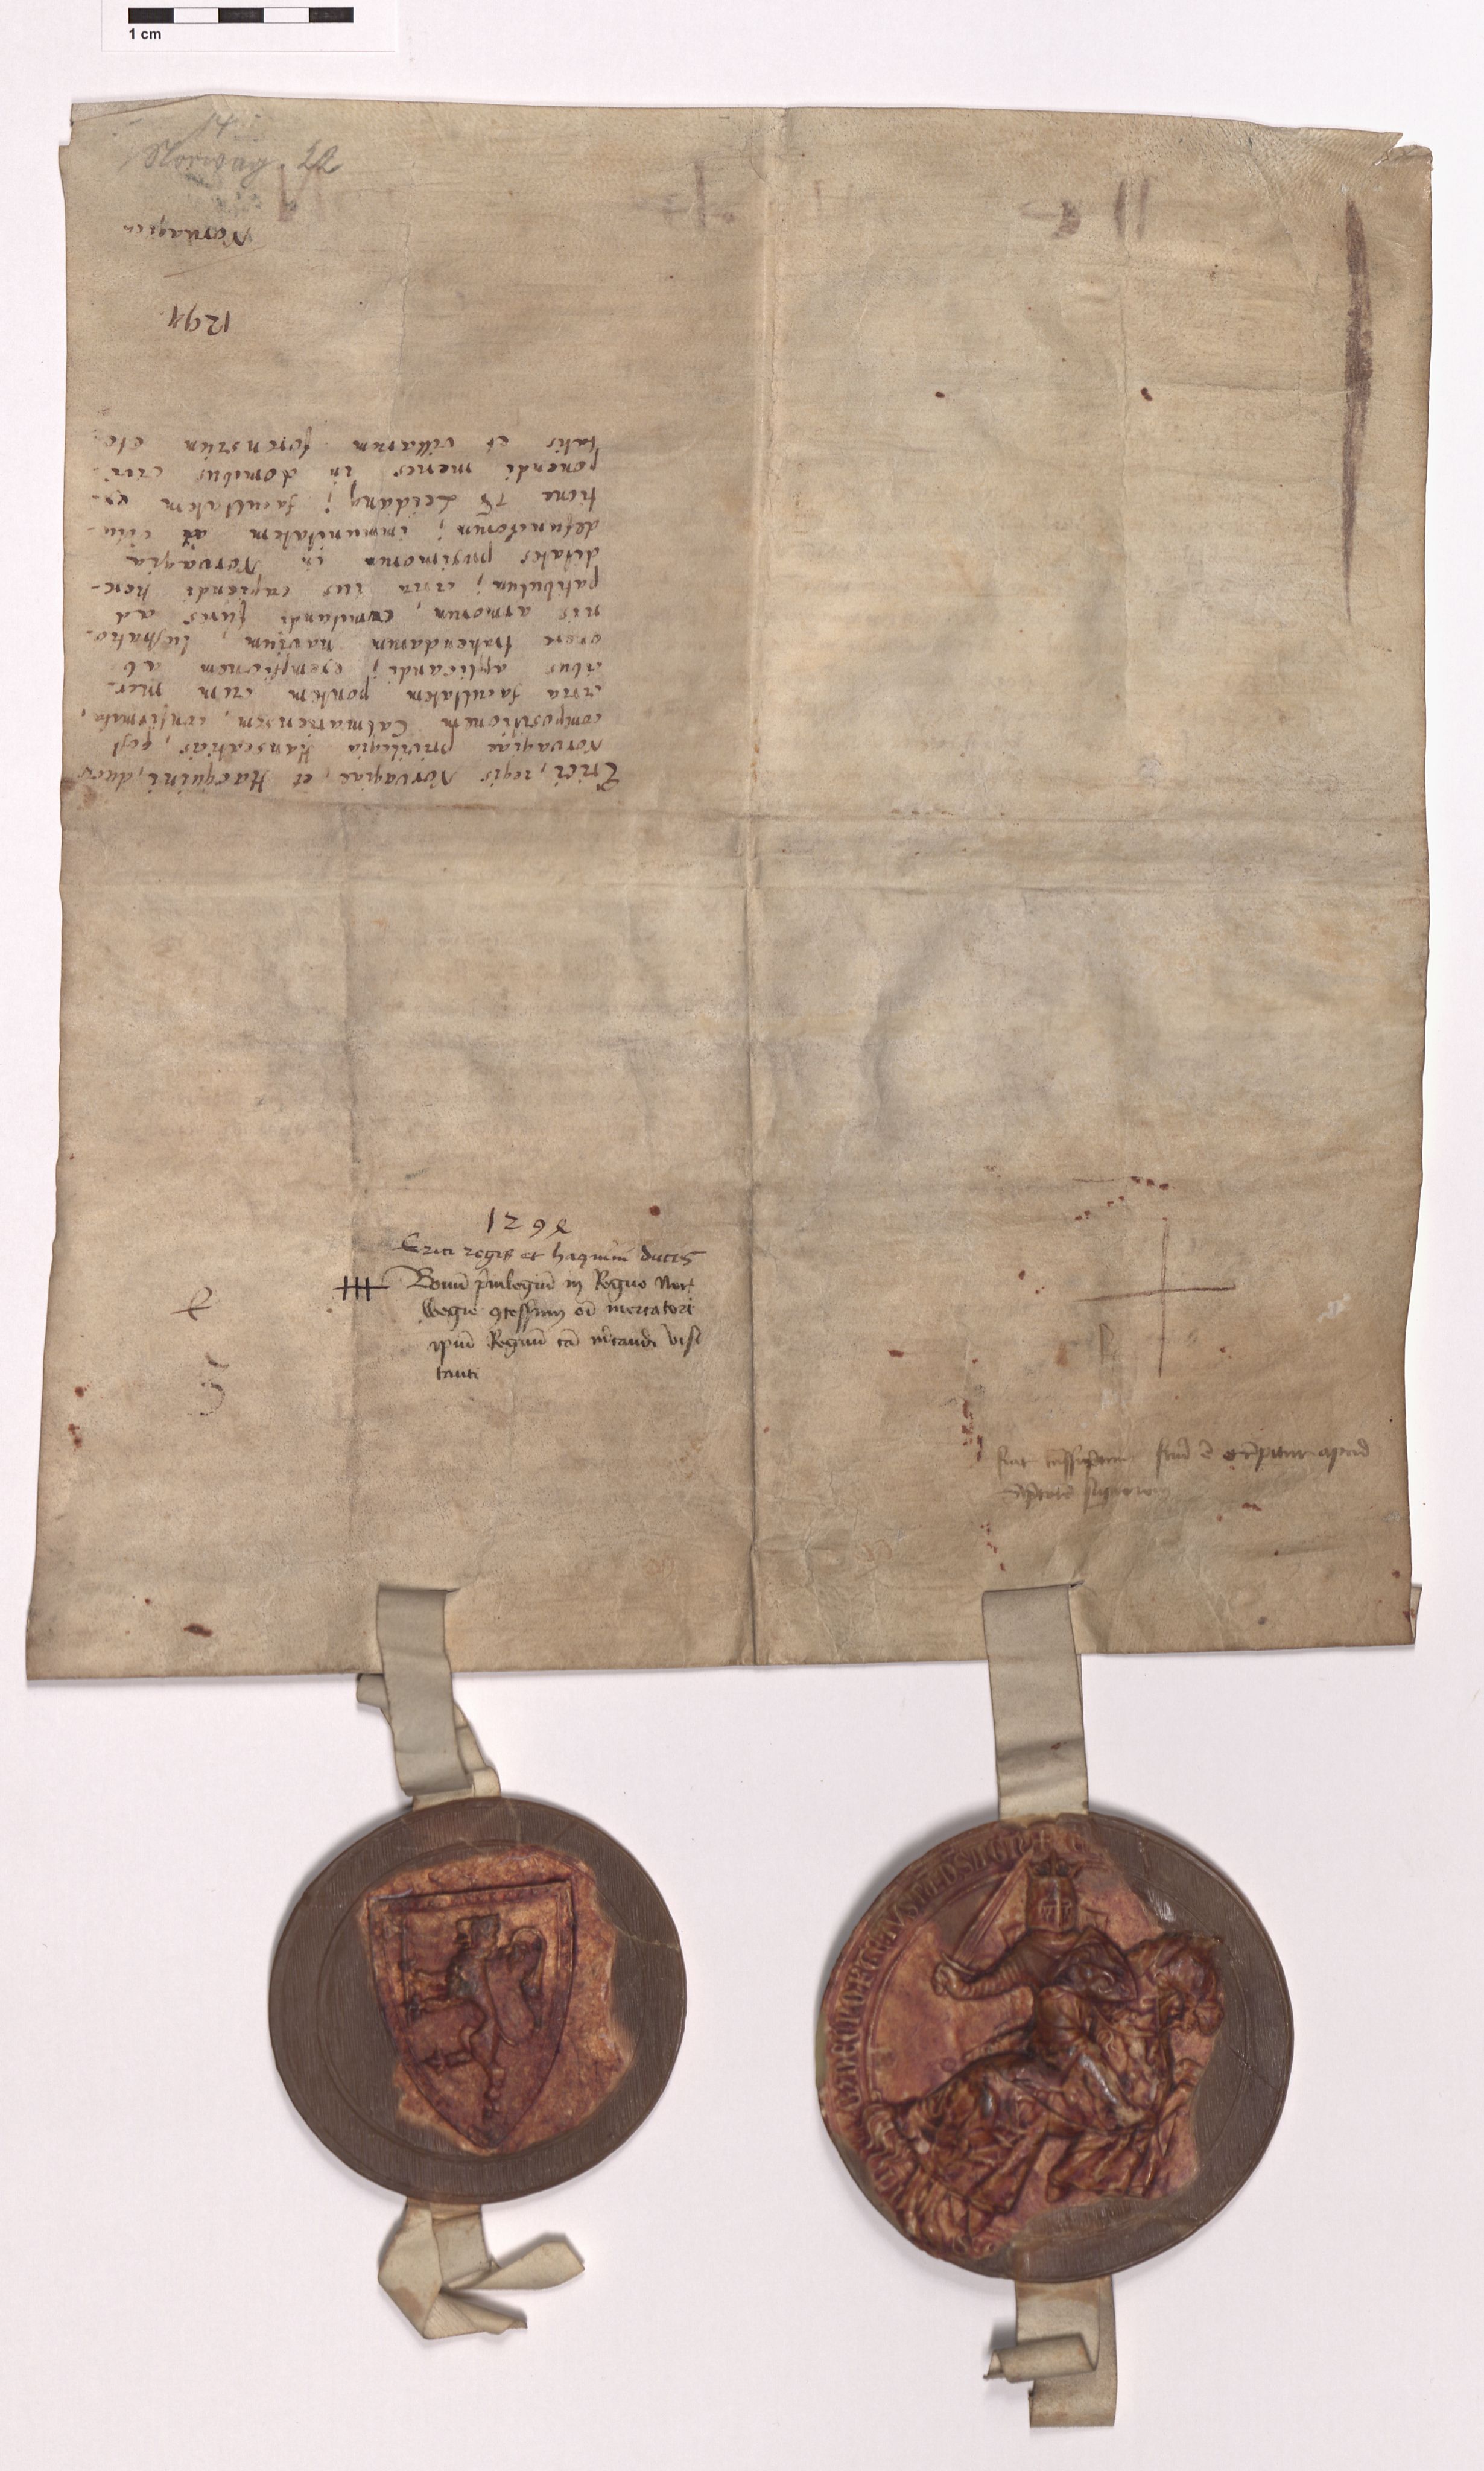 07.1 Urkunden, 3 Auswärtige Beziehungen (Externa), AHL/-/21: Norwegen (Norvagica); Kontor zu Bergen, 1247-1747, s. 183